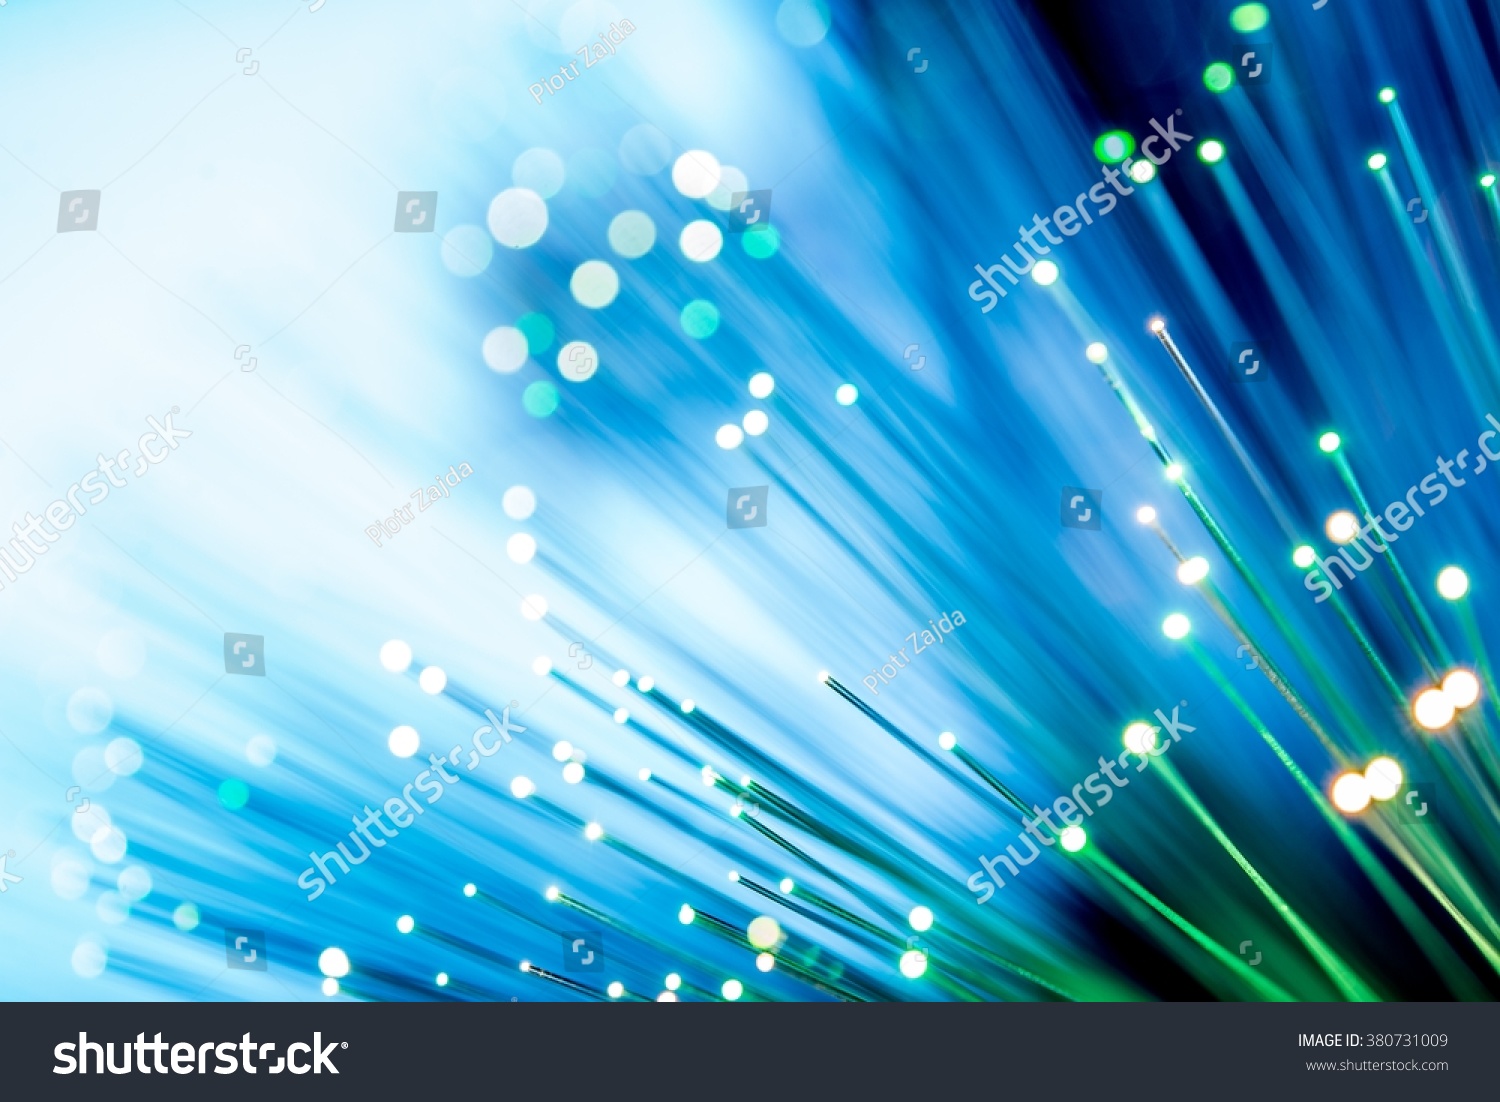 Glowing Fiber Optic Channels Closeup Photo. Fiber Channel Background. #380731009